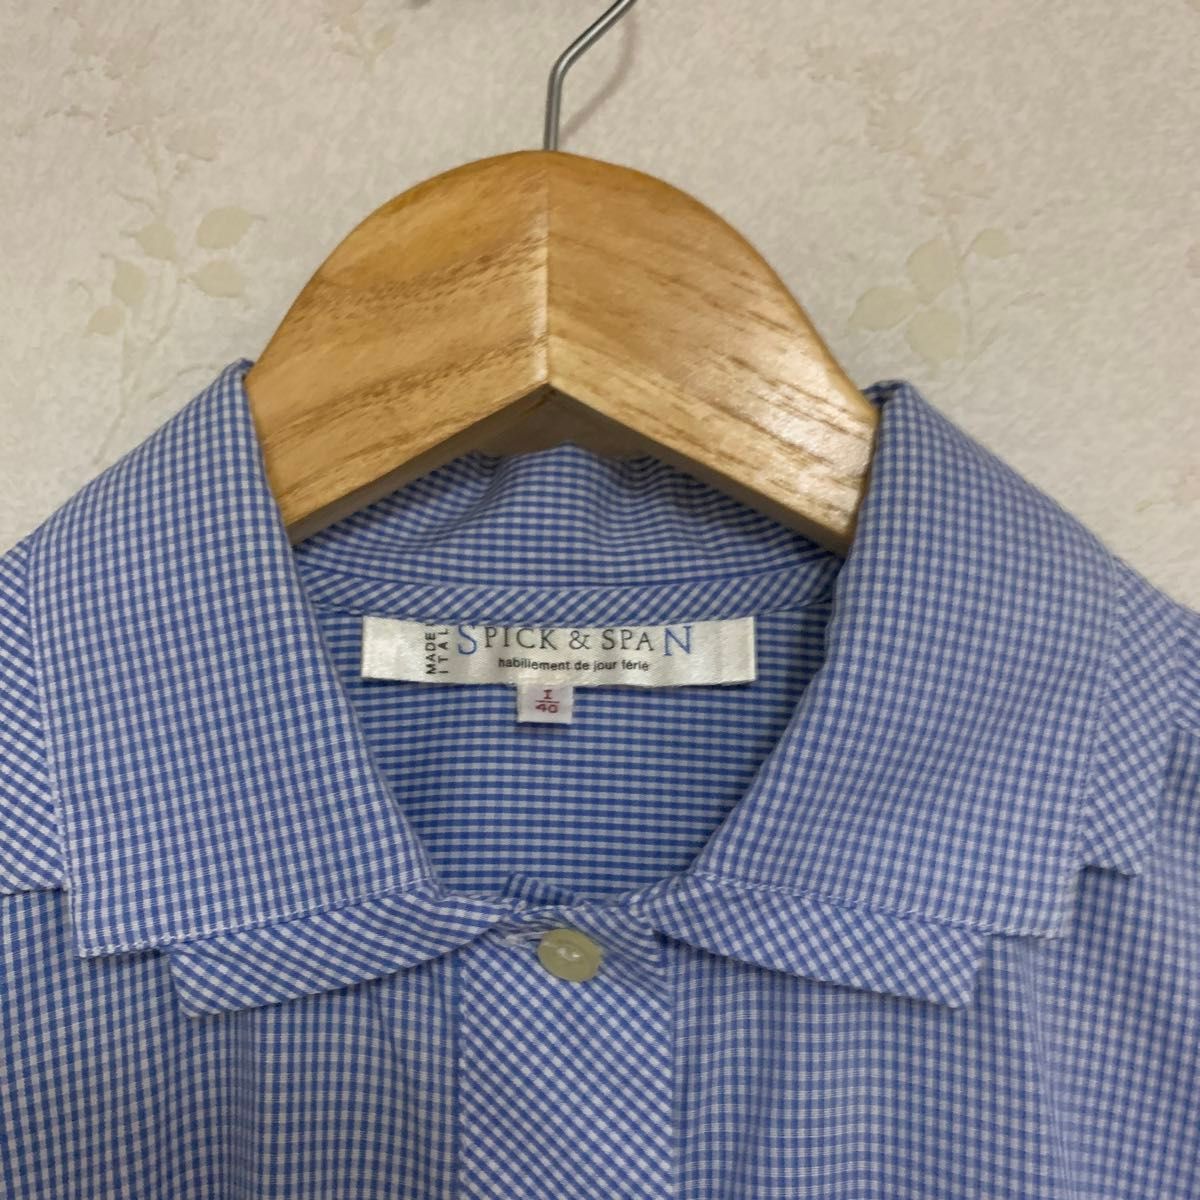 【SPIC&SPAN】 スピックアンドスパン、イタリア製、長袖シャツ.ブラウス.40サイズ チェックシャツ コットン長袖シャツ